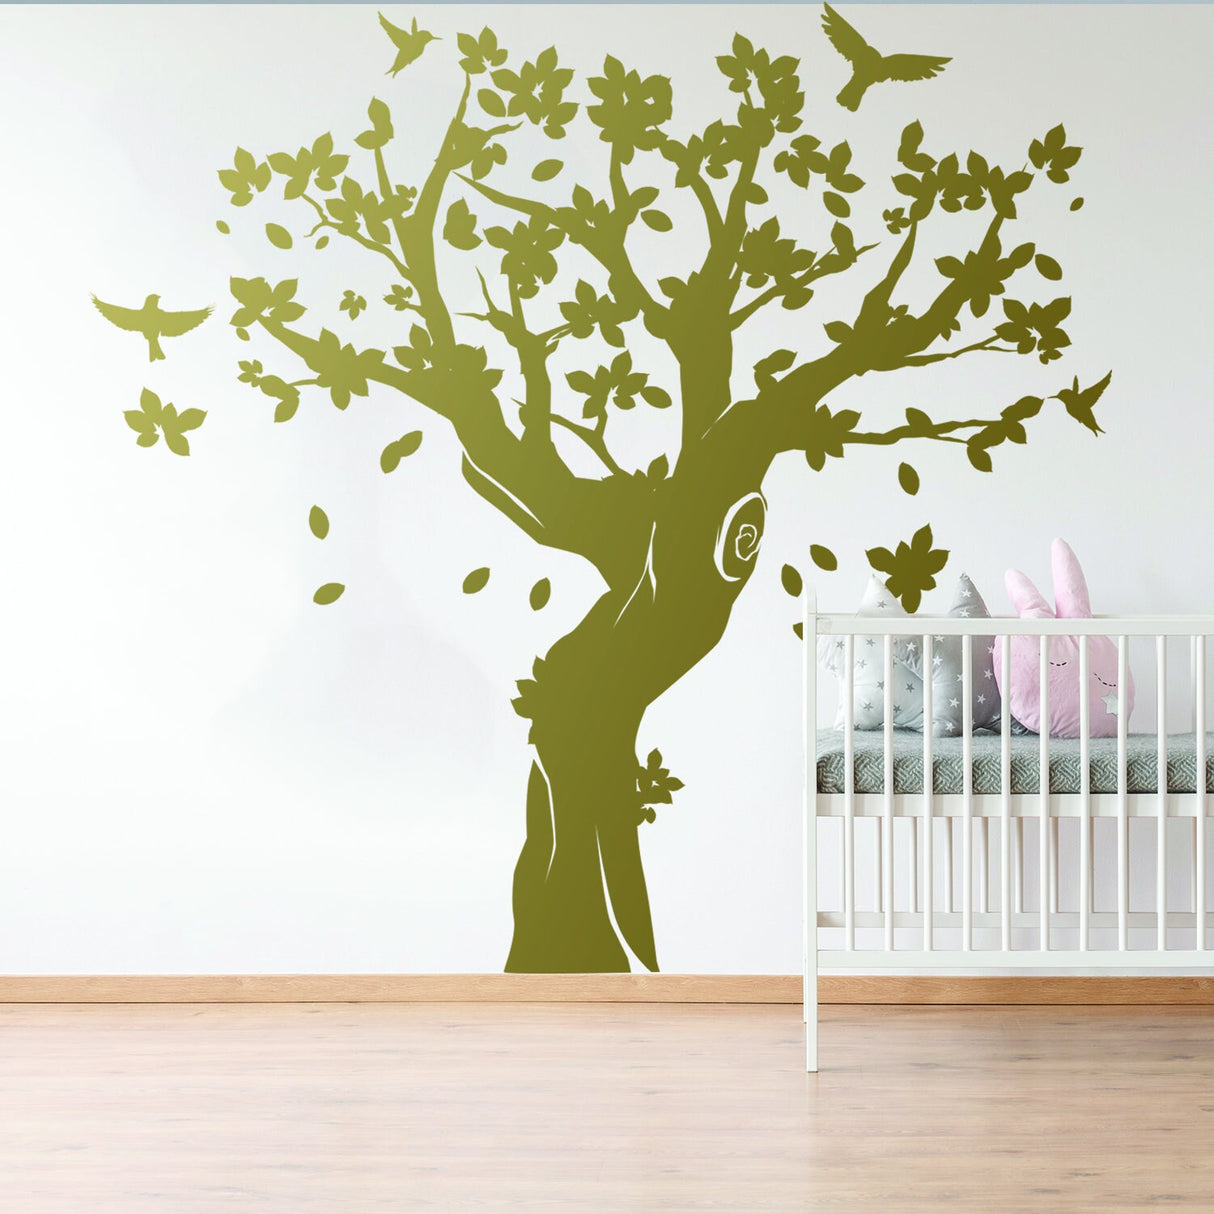 Tree Wall Decal Decor - Large Art Vinyl Sticker For Nursery Kids Room